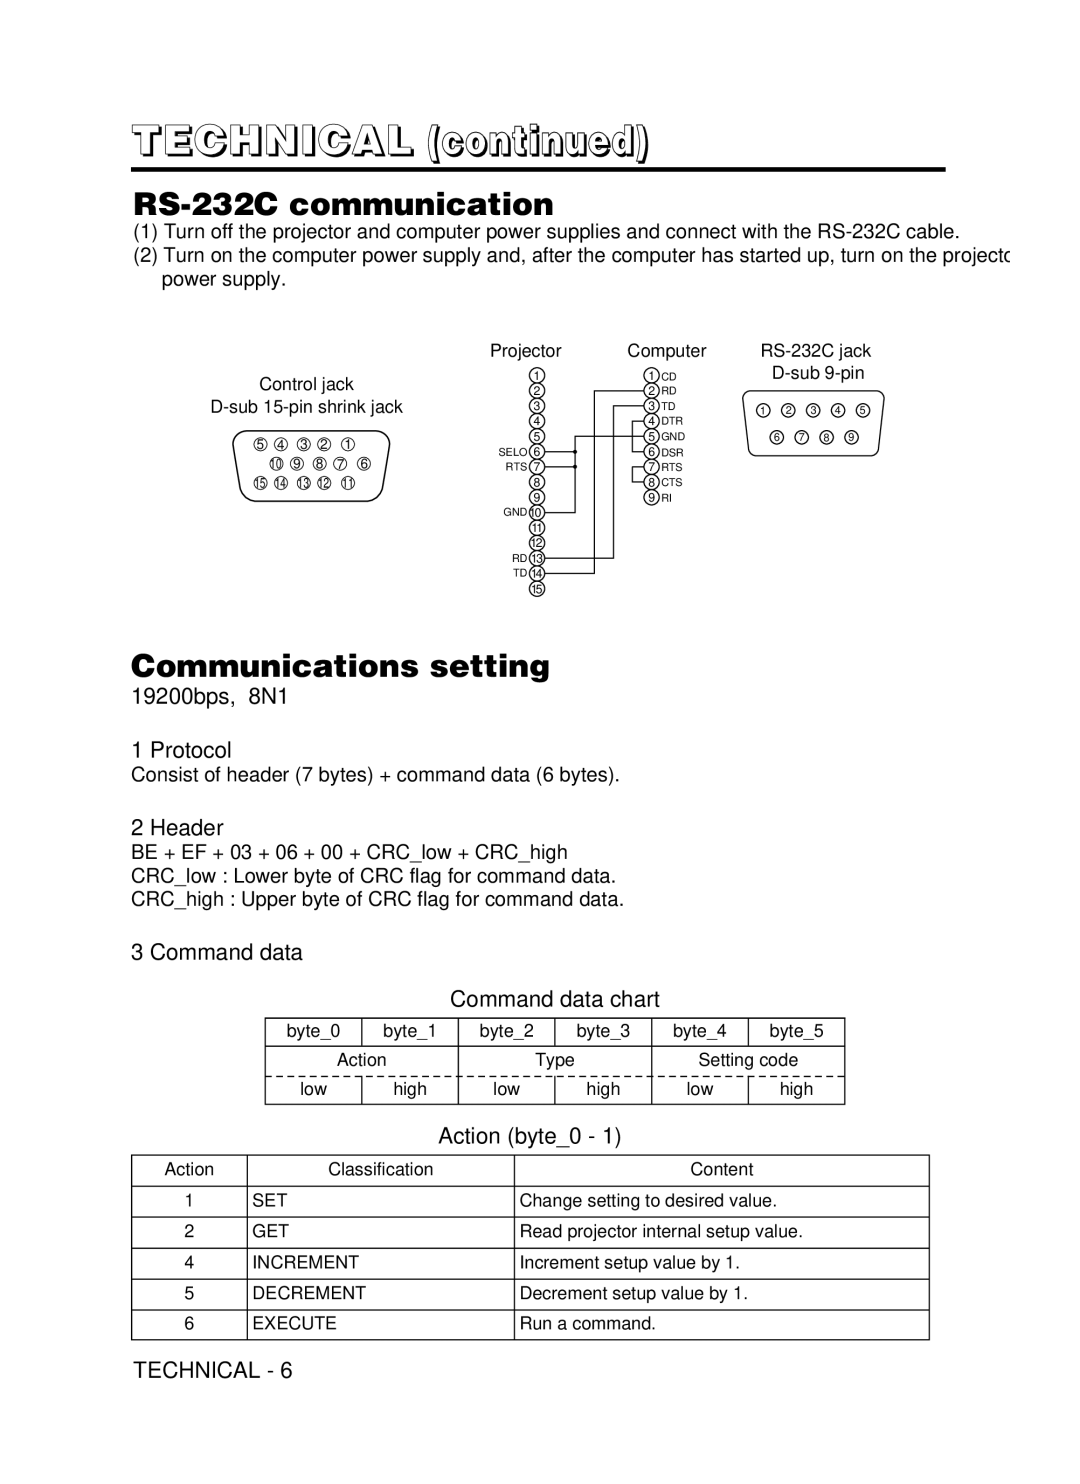 Hitachi CPX430W user manual RS-232C communication, Communications setting, Protocol, Header, Command data 